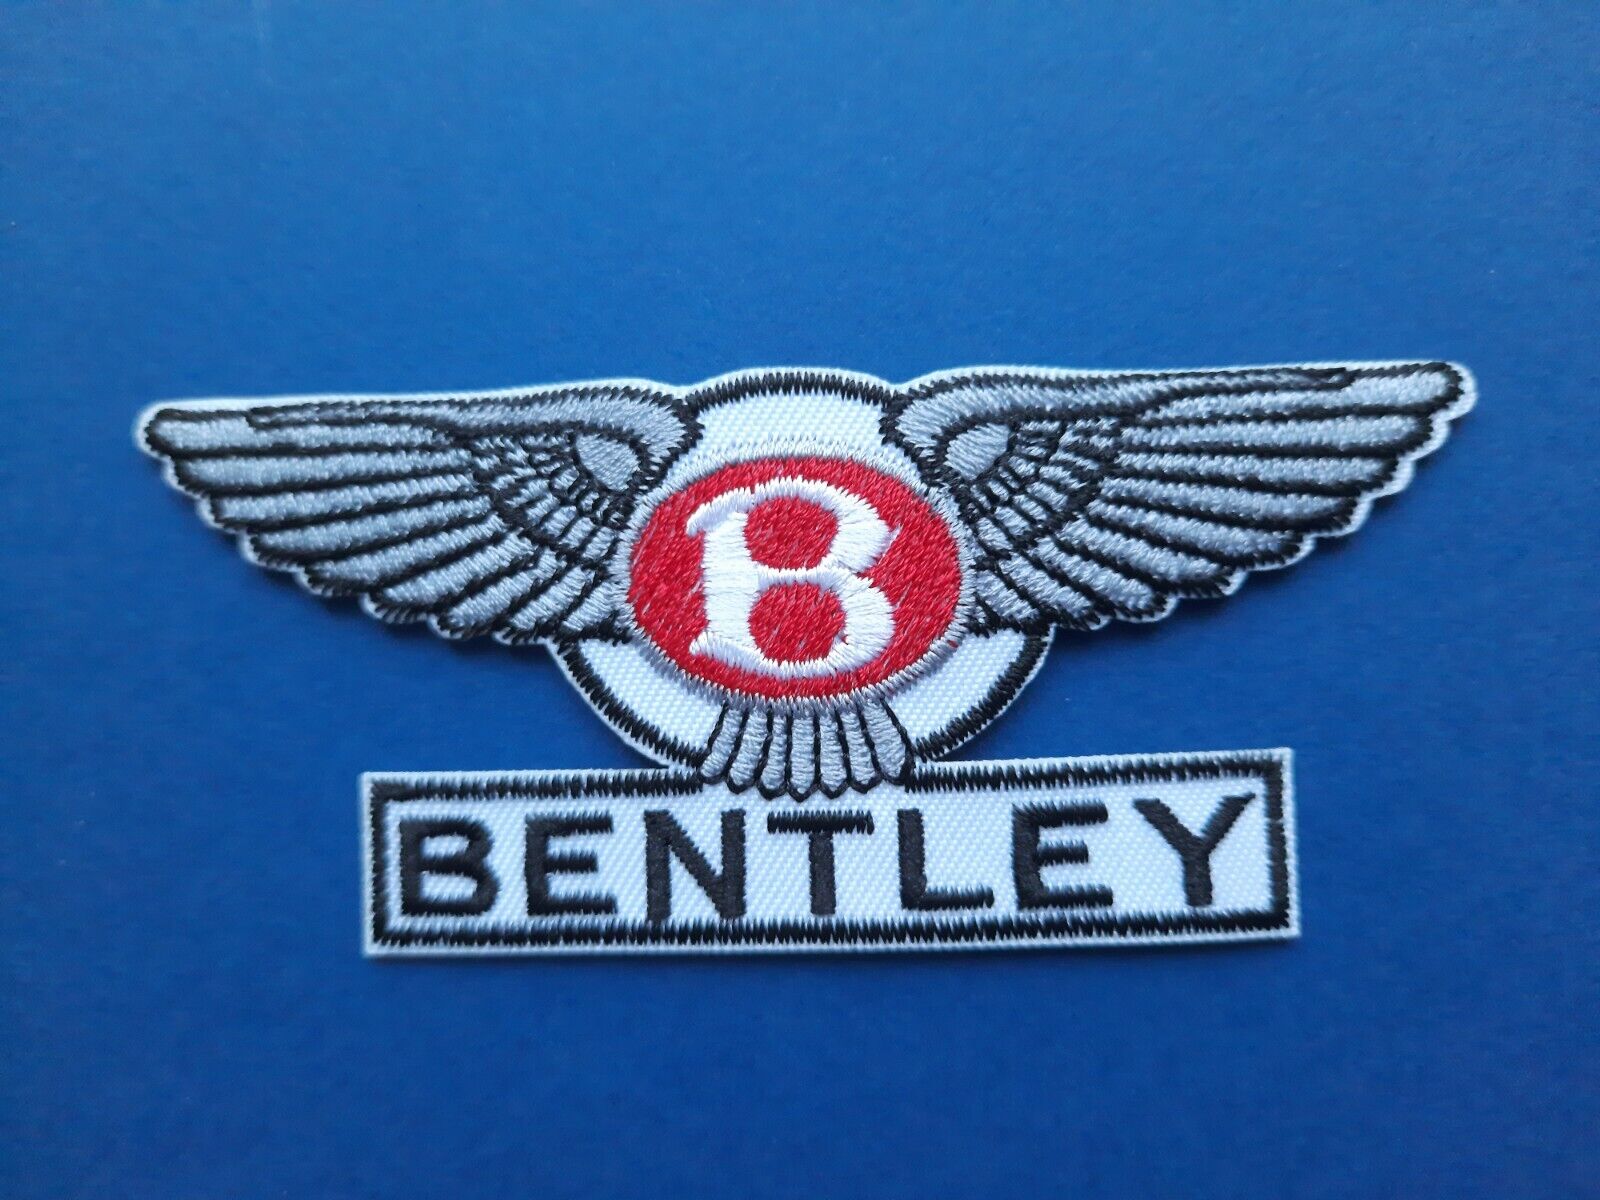 Motorsport Motor Racing Car Patch Sew / Iron On Badge:- Bentley